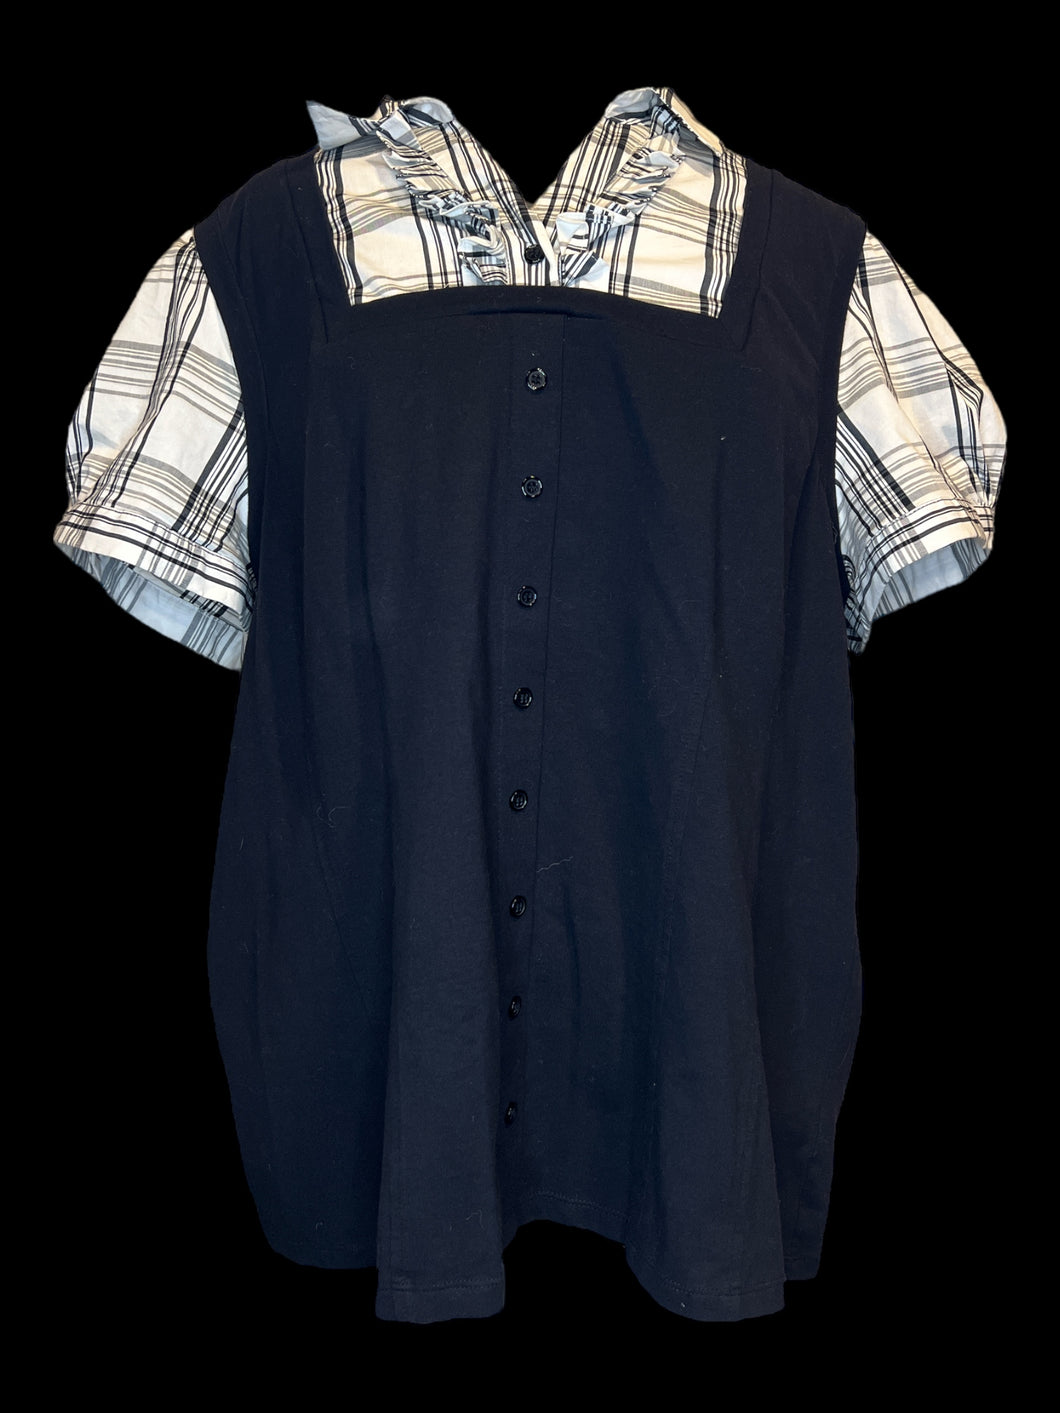 2X Black & white plaid short sleeve folded collar top w/ faux vest, faux button front, & ruffle details